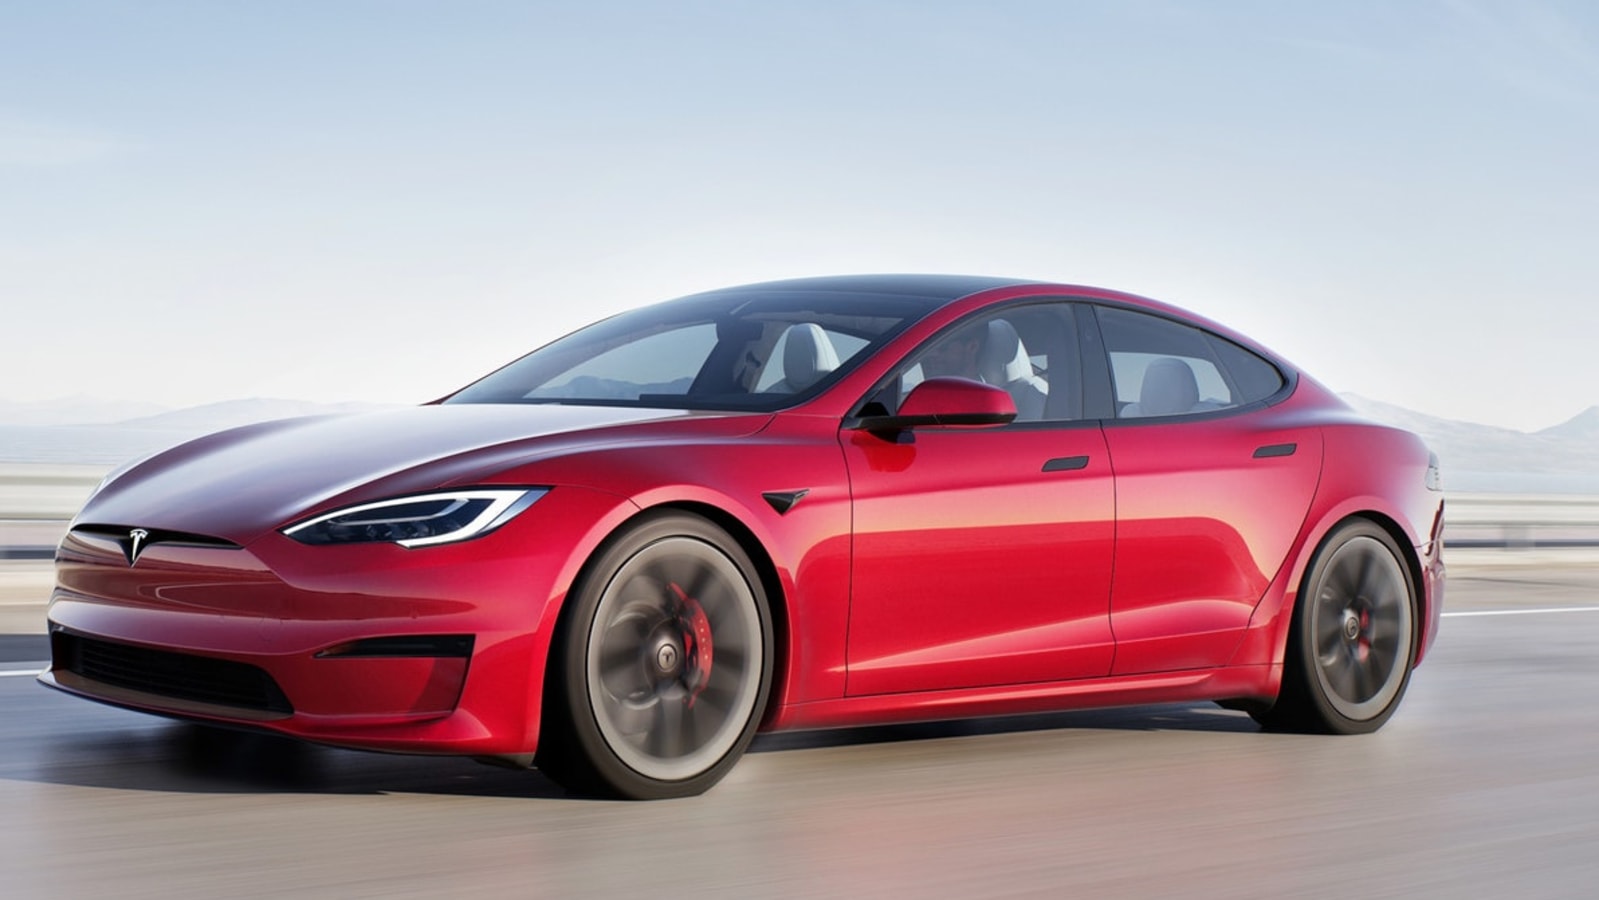 Rode datum magneet Duplicaat New Tesla Model S offers an alternative way to shift gears